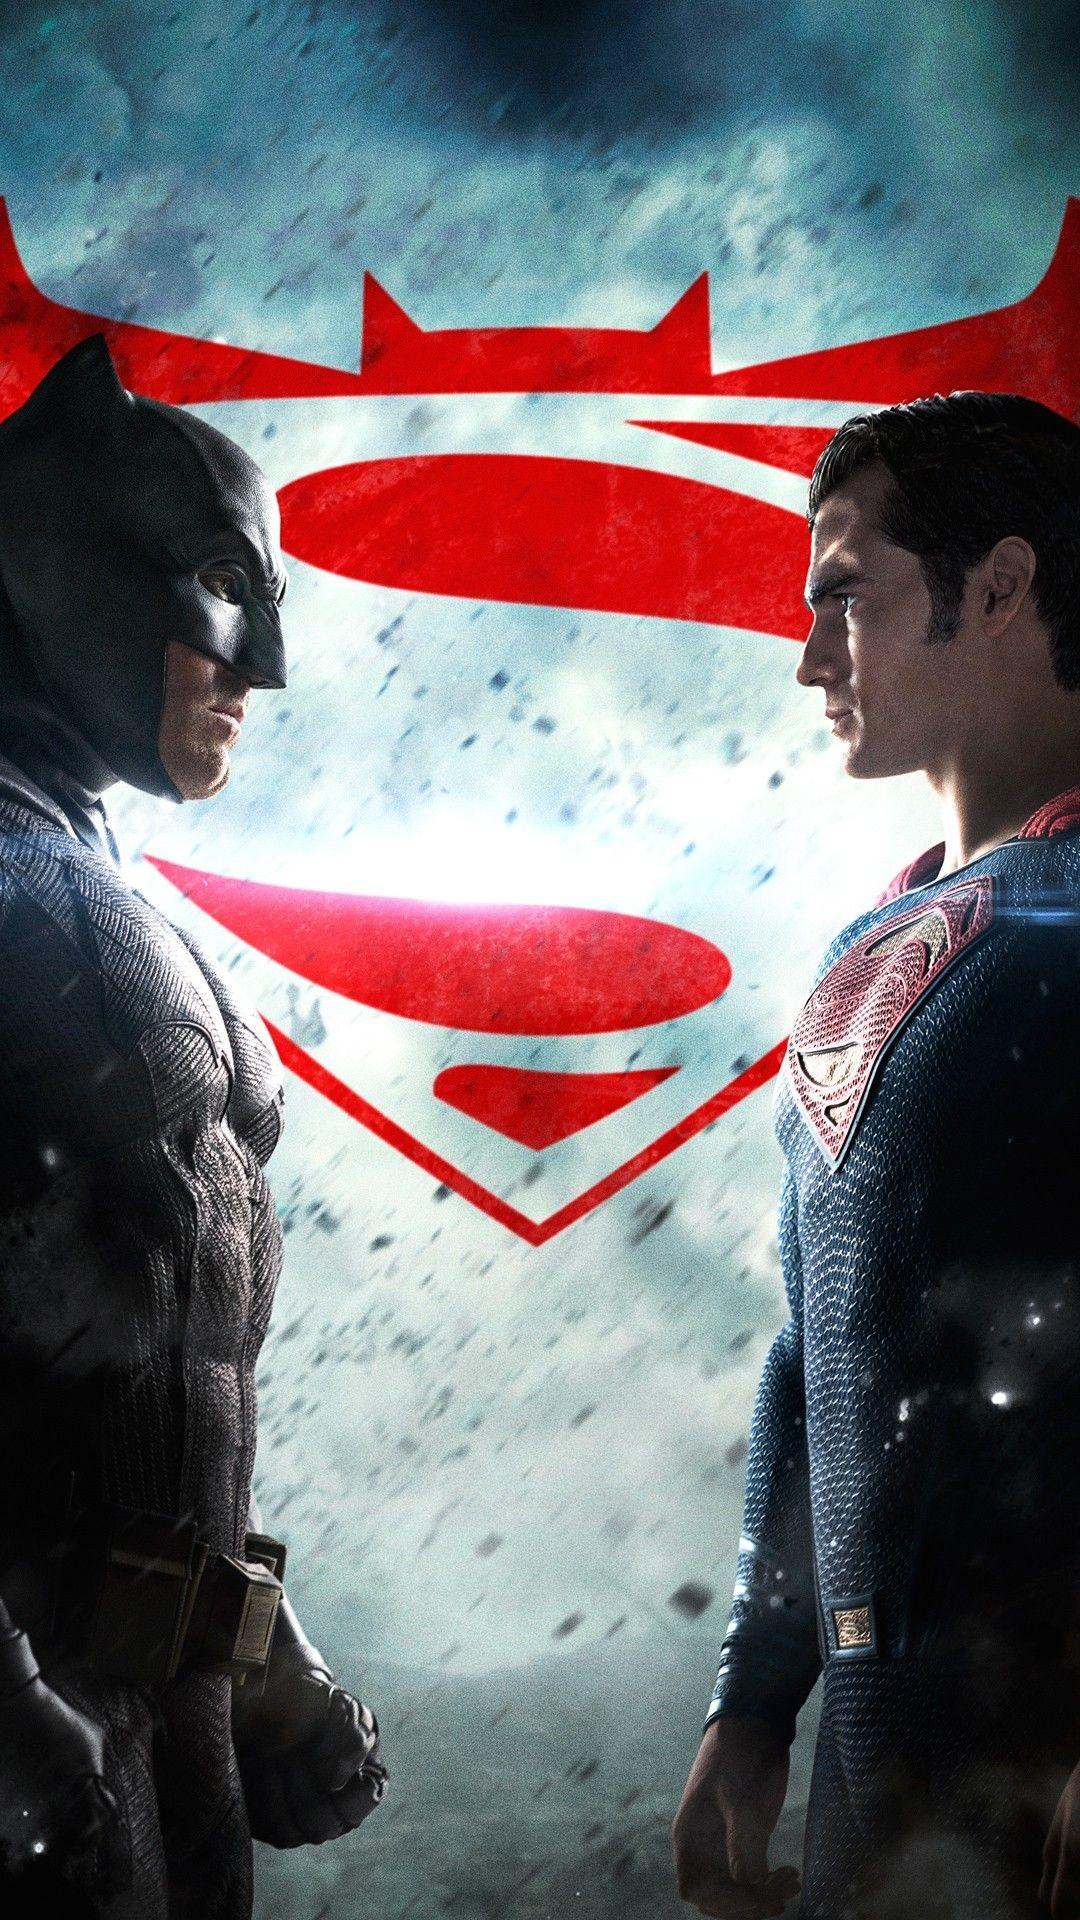 BATMAN VS. SUPERMAN WALLPAPER FOR PHONE